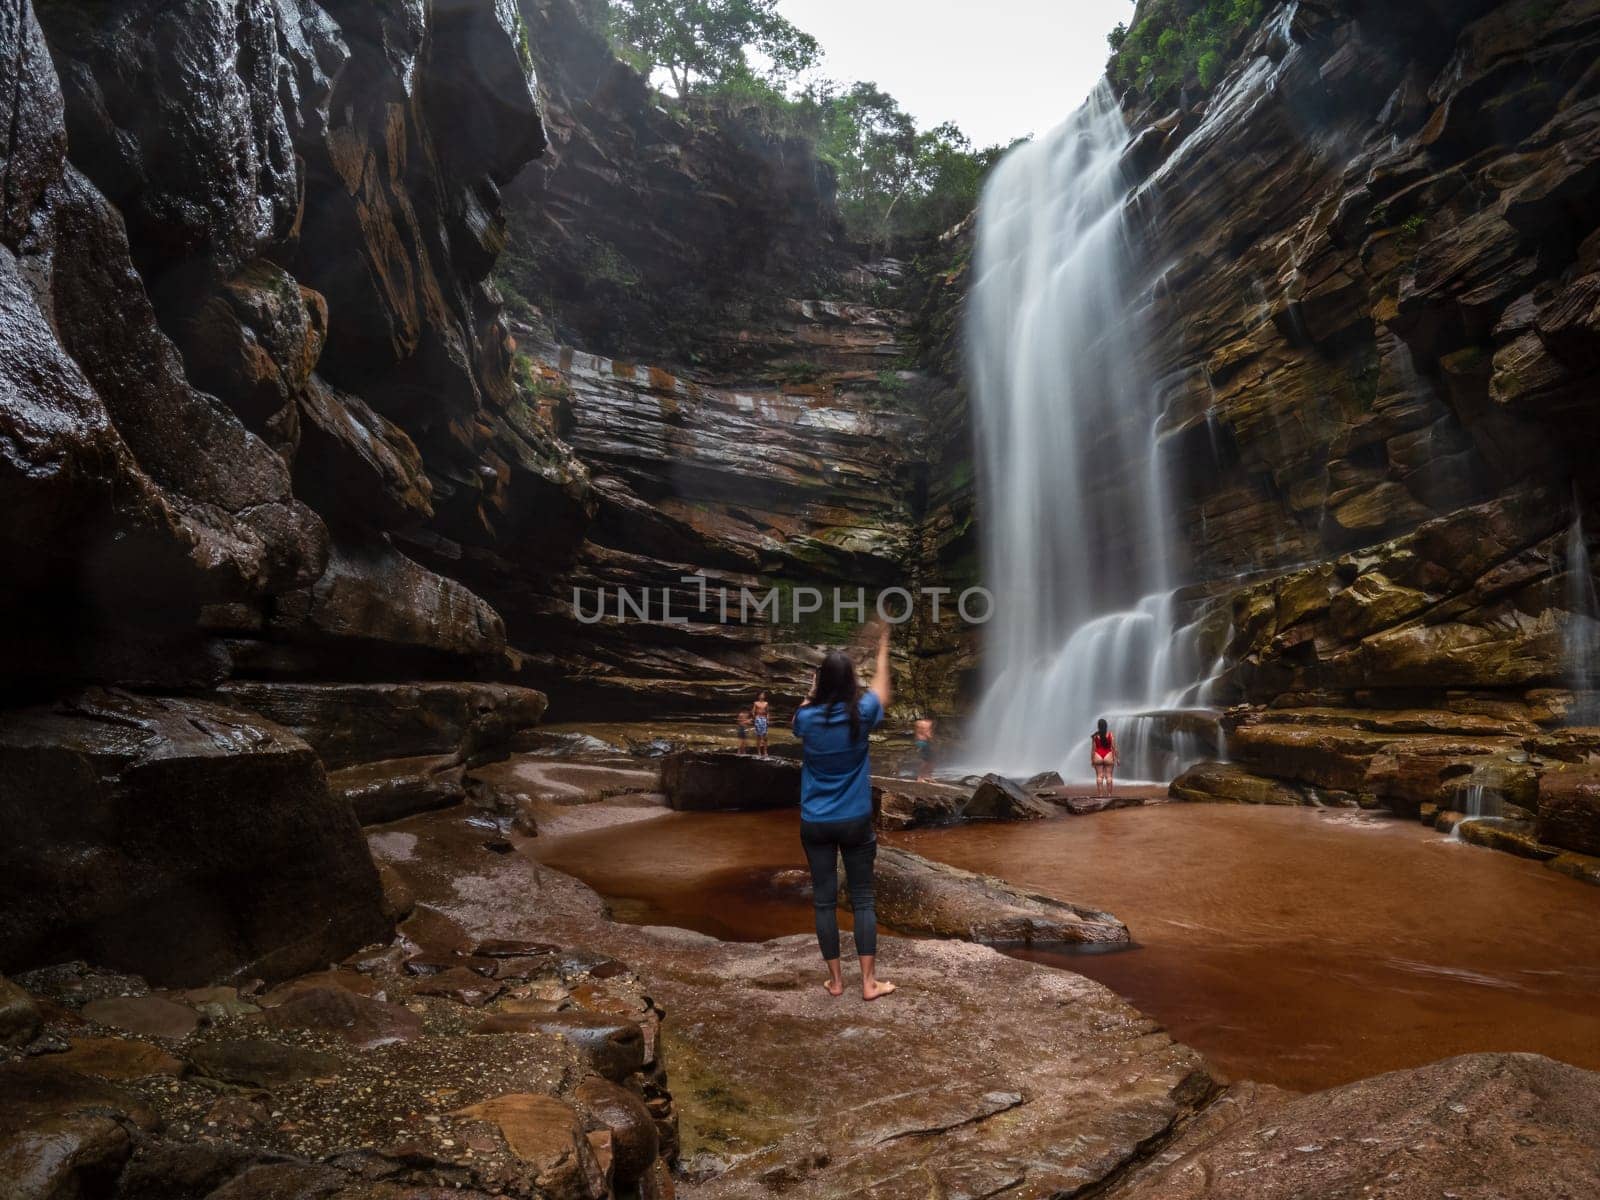 Exploring the Majestic Waterfall in a Serene Wilderness by FerradalFCG